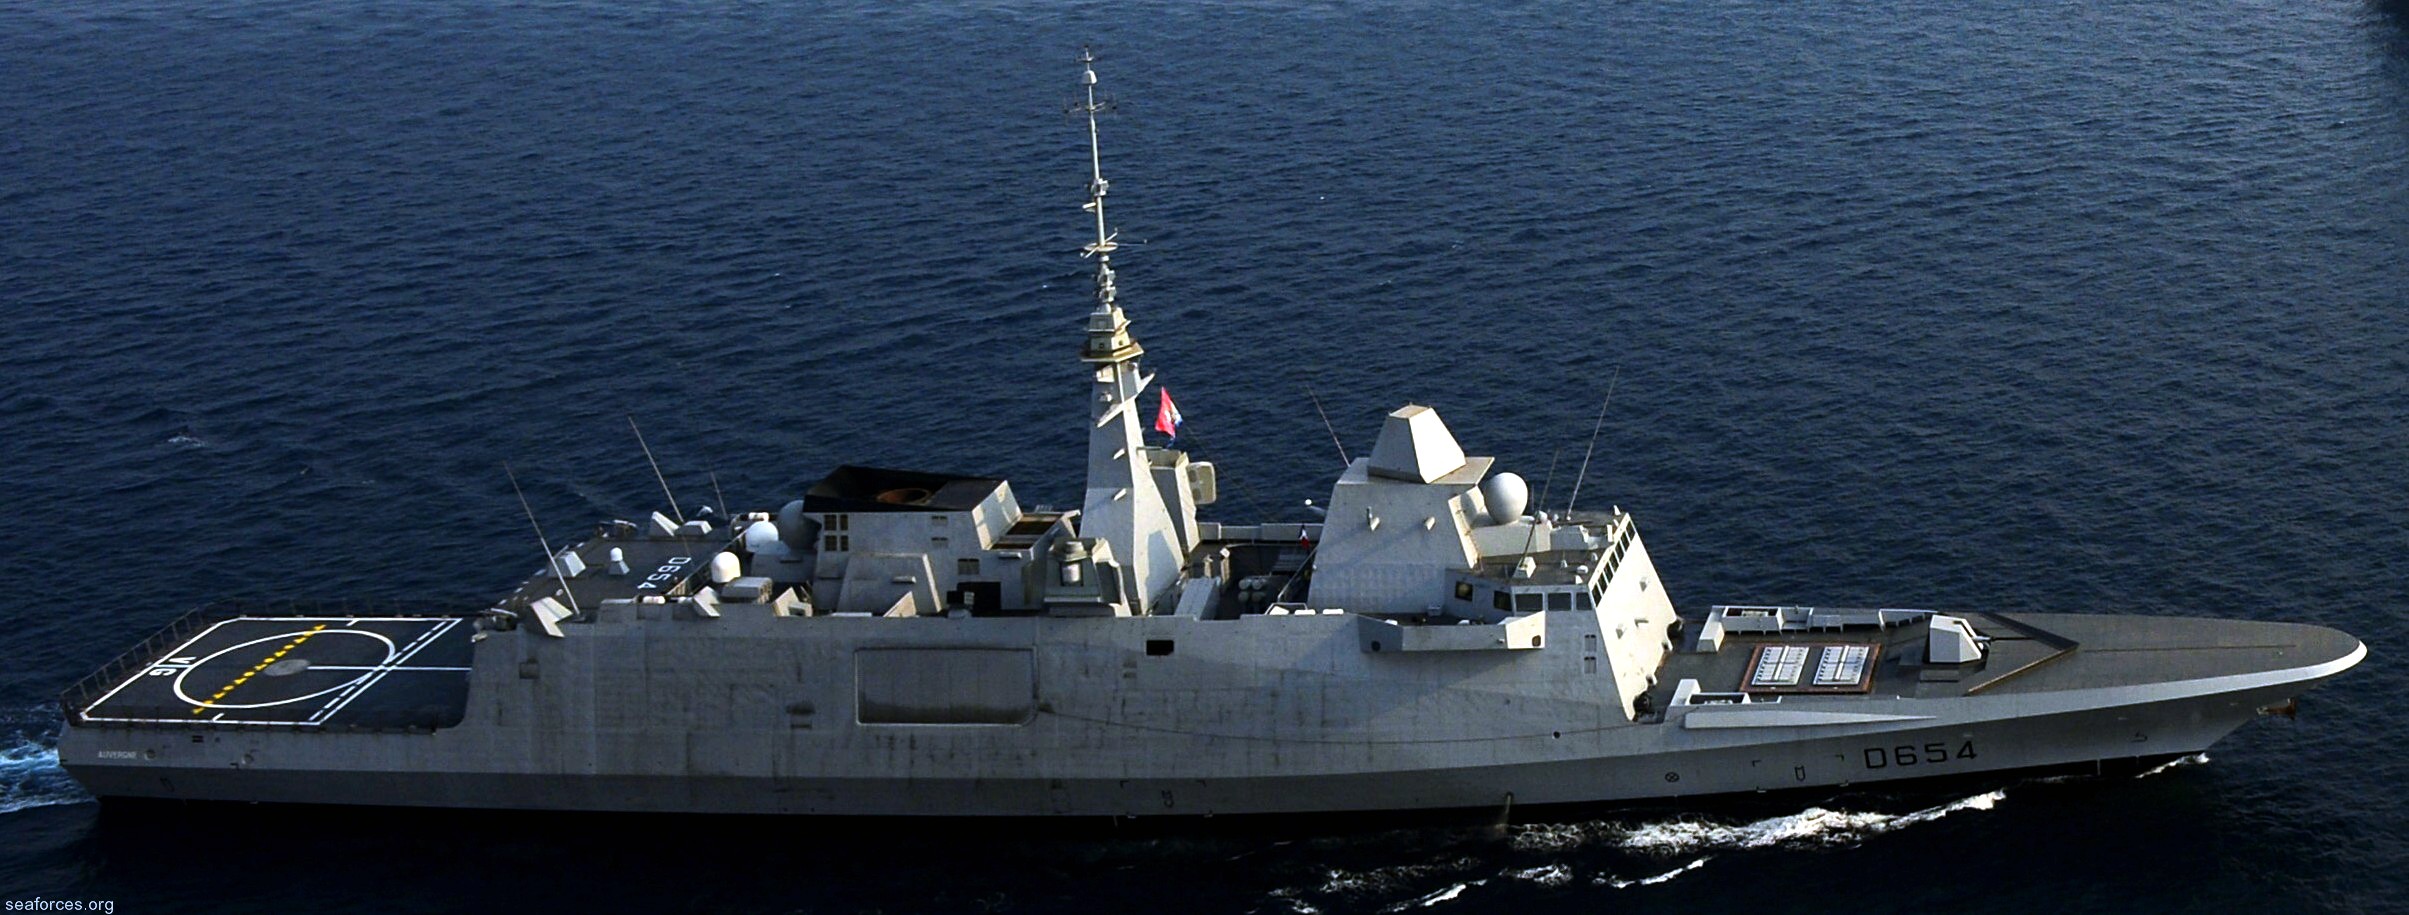 d-654 fs auvergne fremm aquitaine class frigate fregate multi purpose french navy marine nationale 03